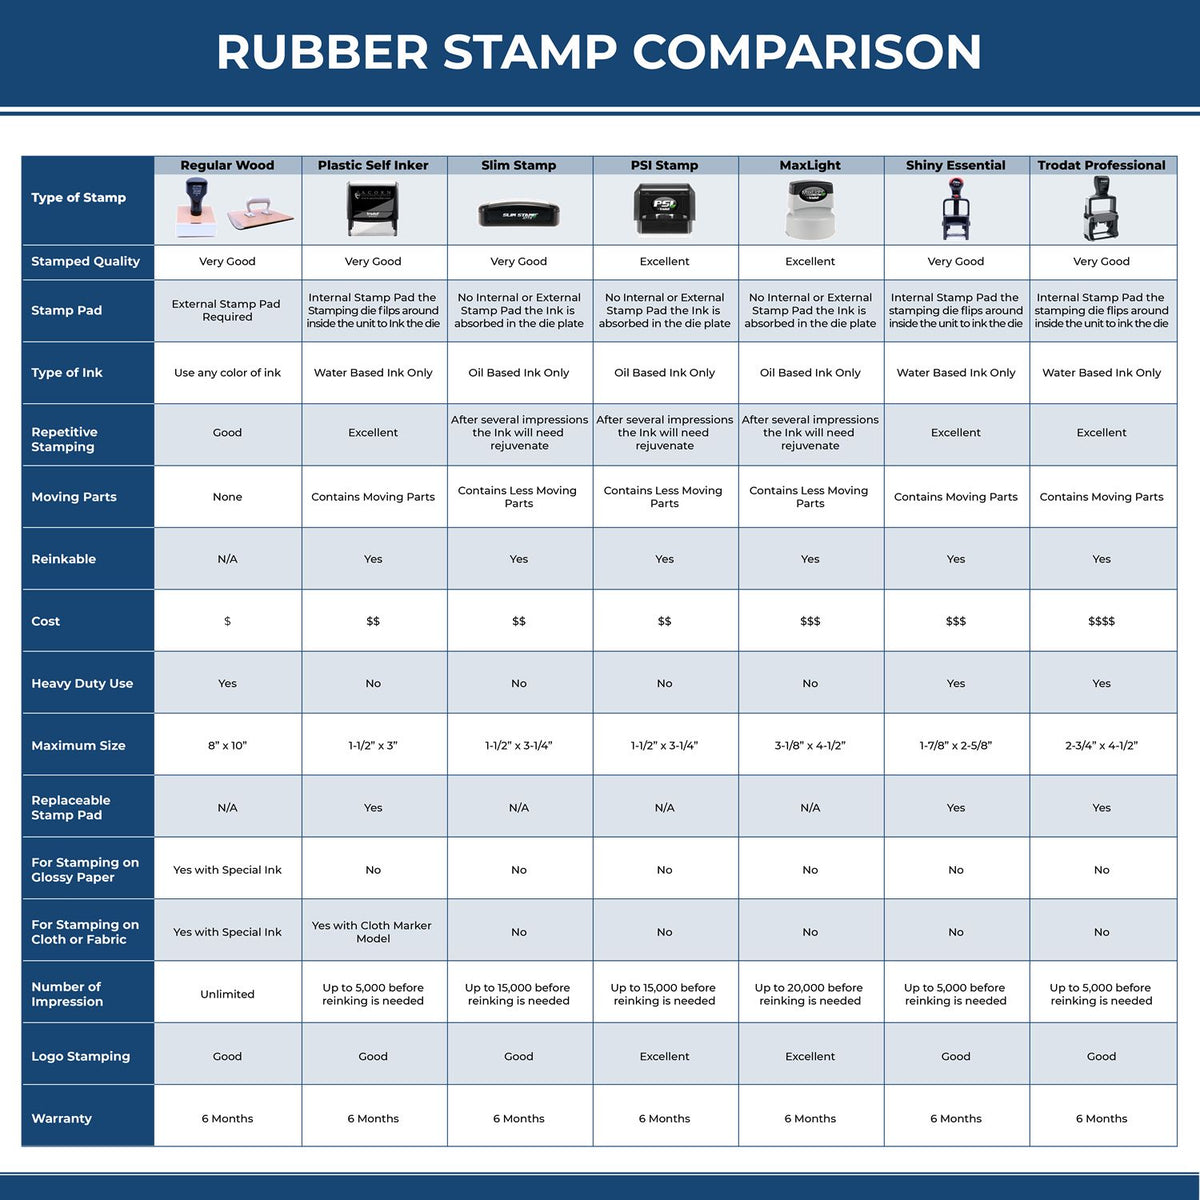 Plaintiffs Exhibit Rubber Stamp 4323R Rubber Stamp Comparison